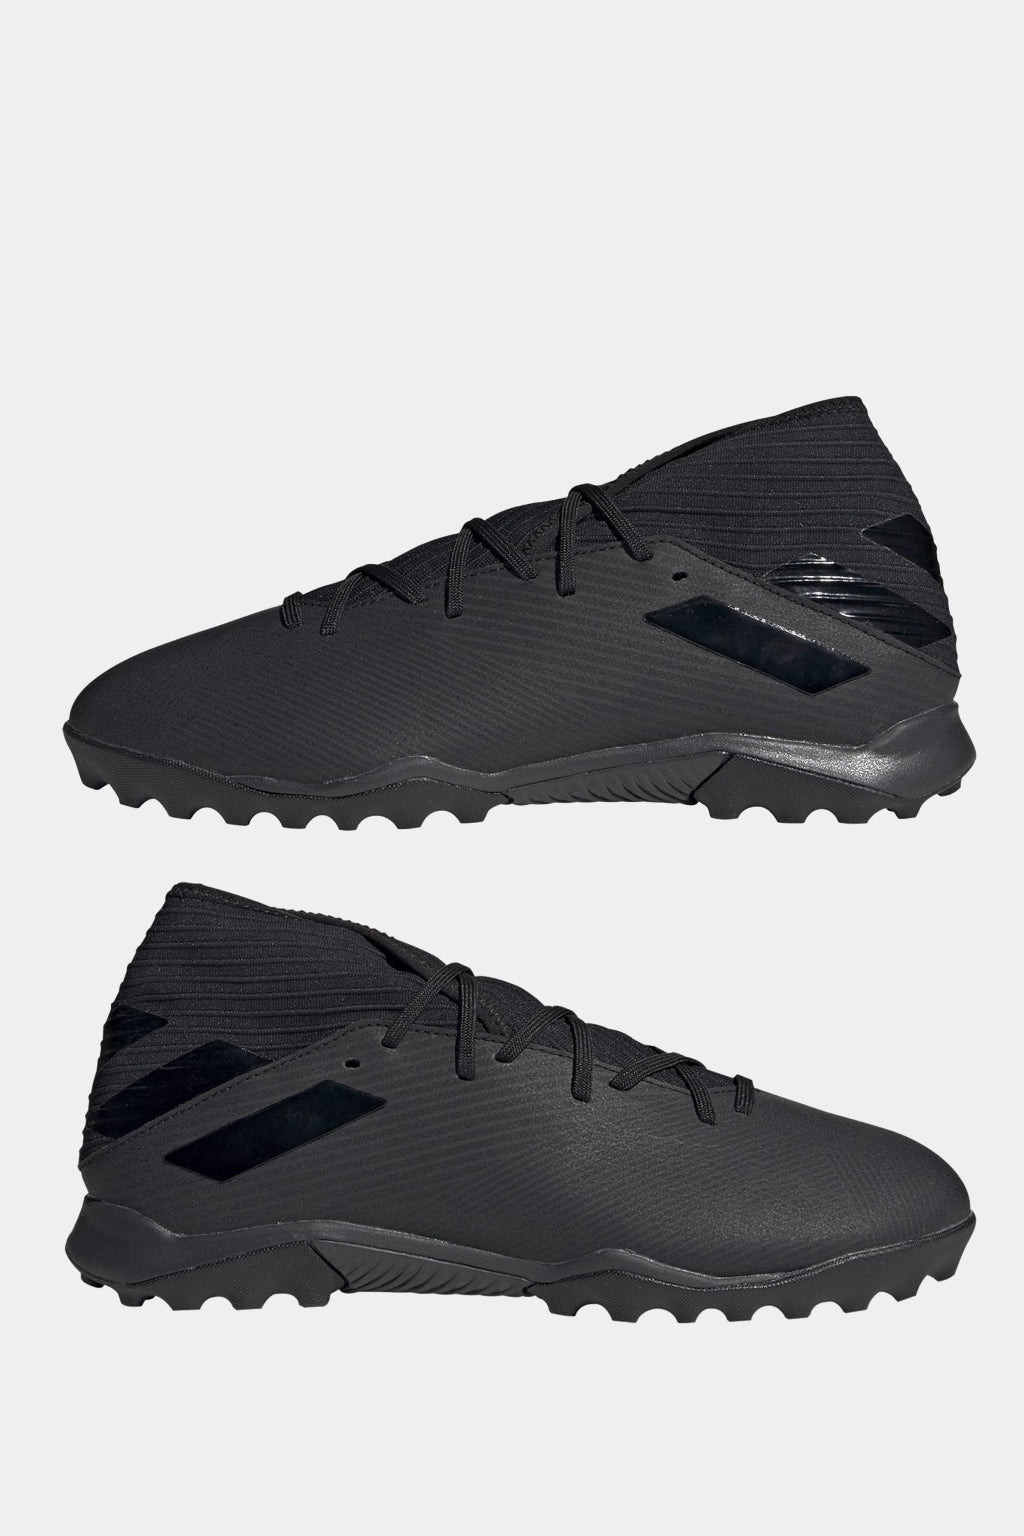 Adidas - Nemeziz 19.3 Turf Boots